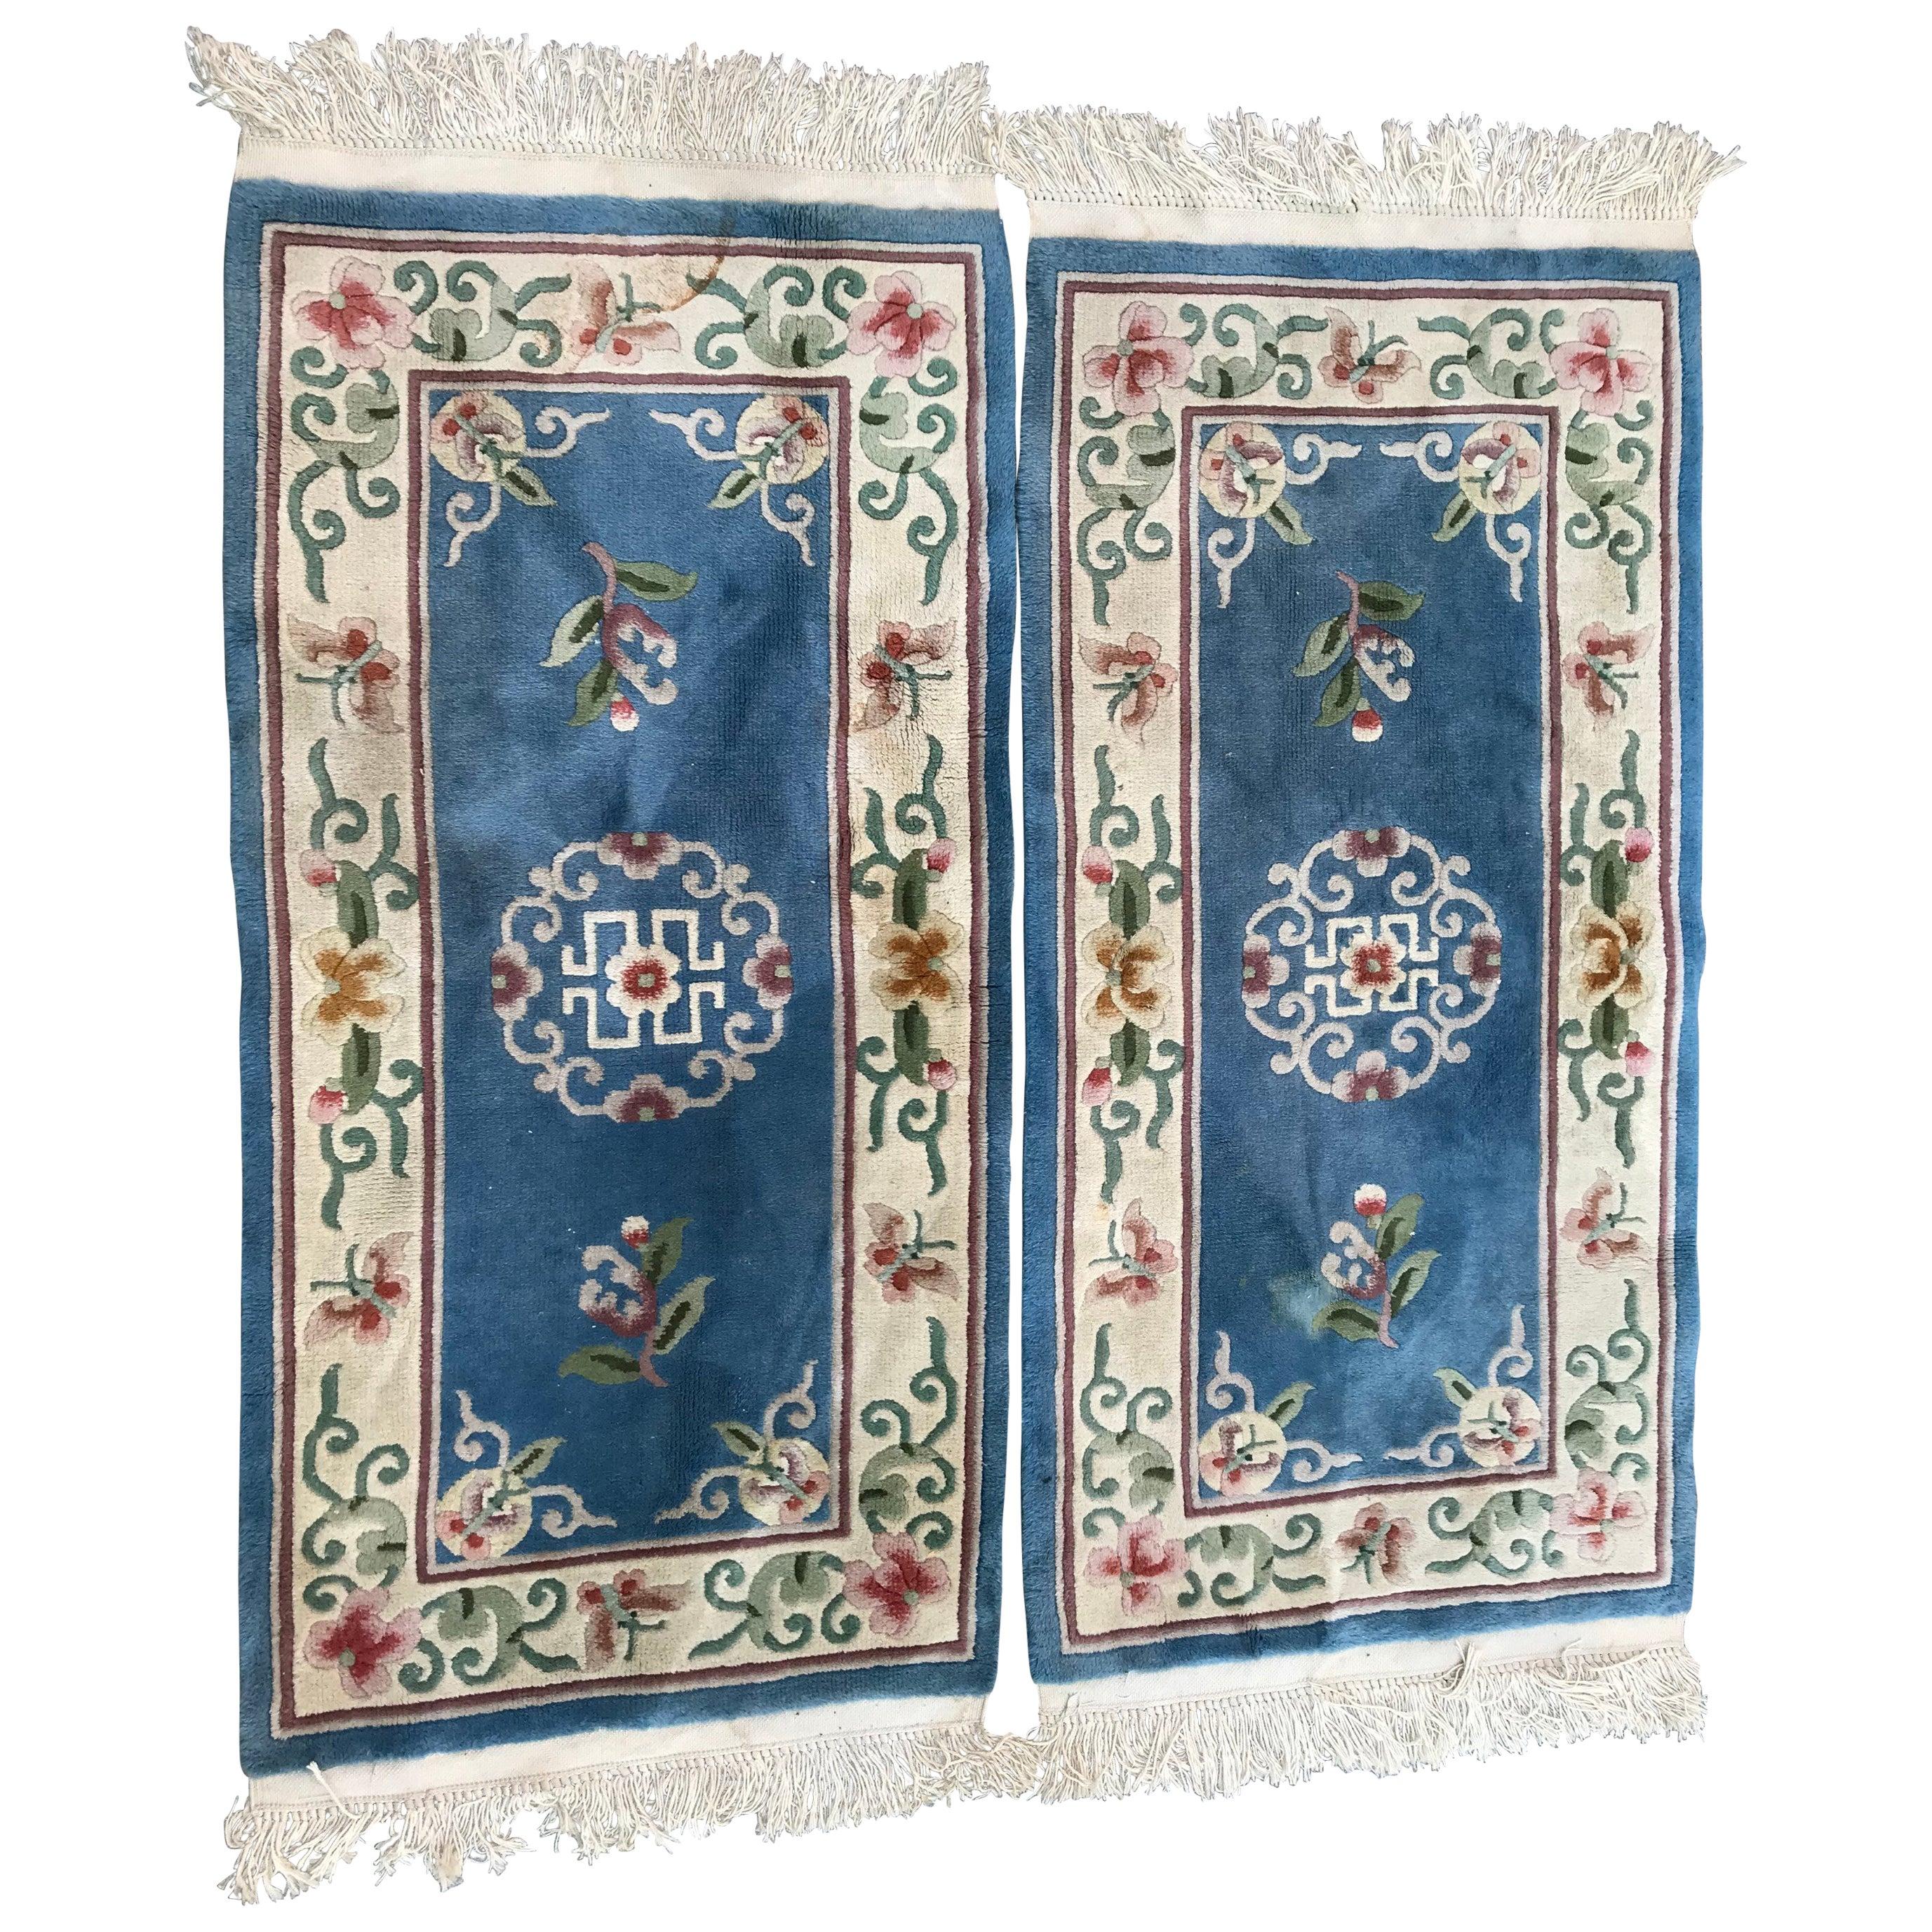 Bobyrug's Pair of Vintage Chinese Blue Field Rugs (Paire de tapis chinois vintage de couleur bleue)